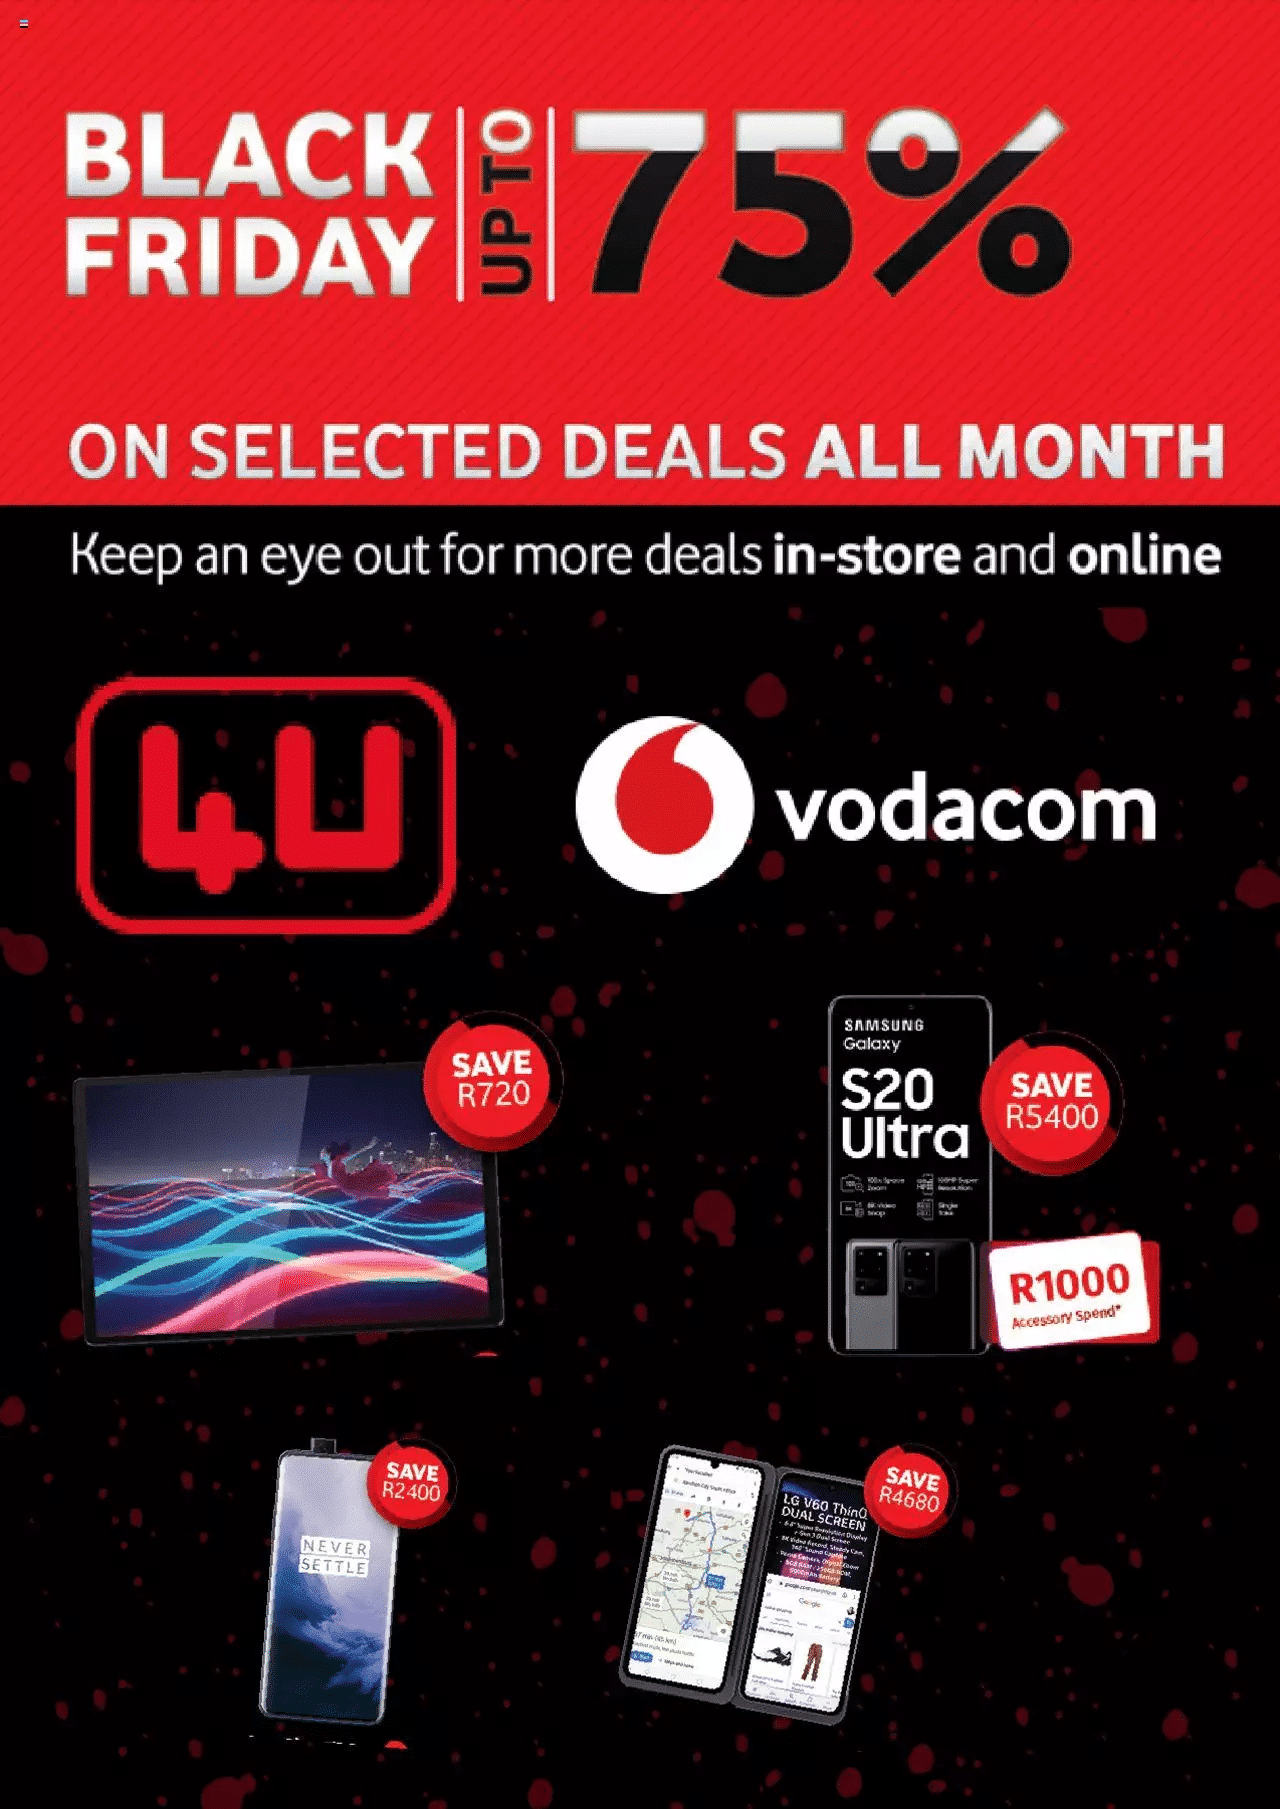 Vodacom Black Friday Deals & Specials 2021 - When Are Black Friday Deals Announced 2021